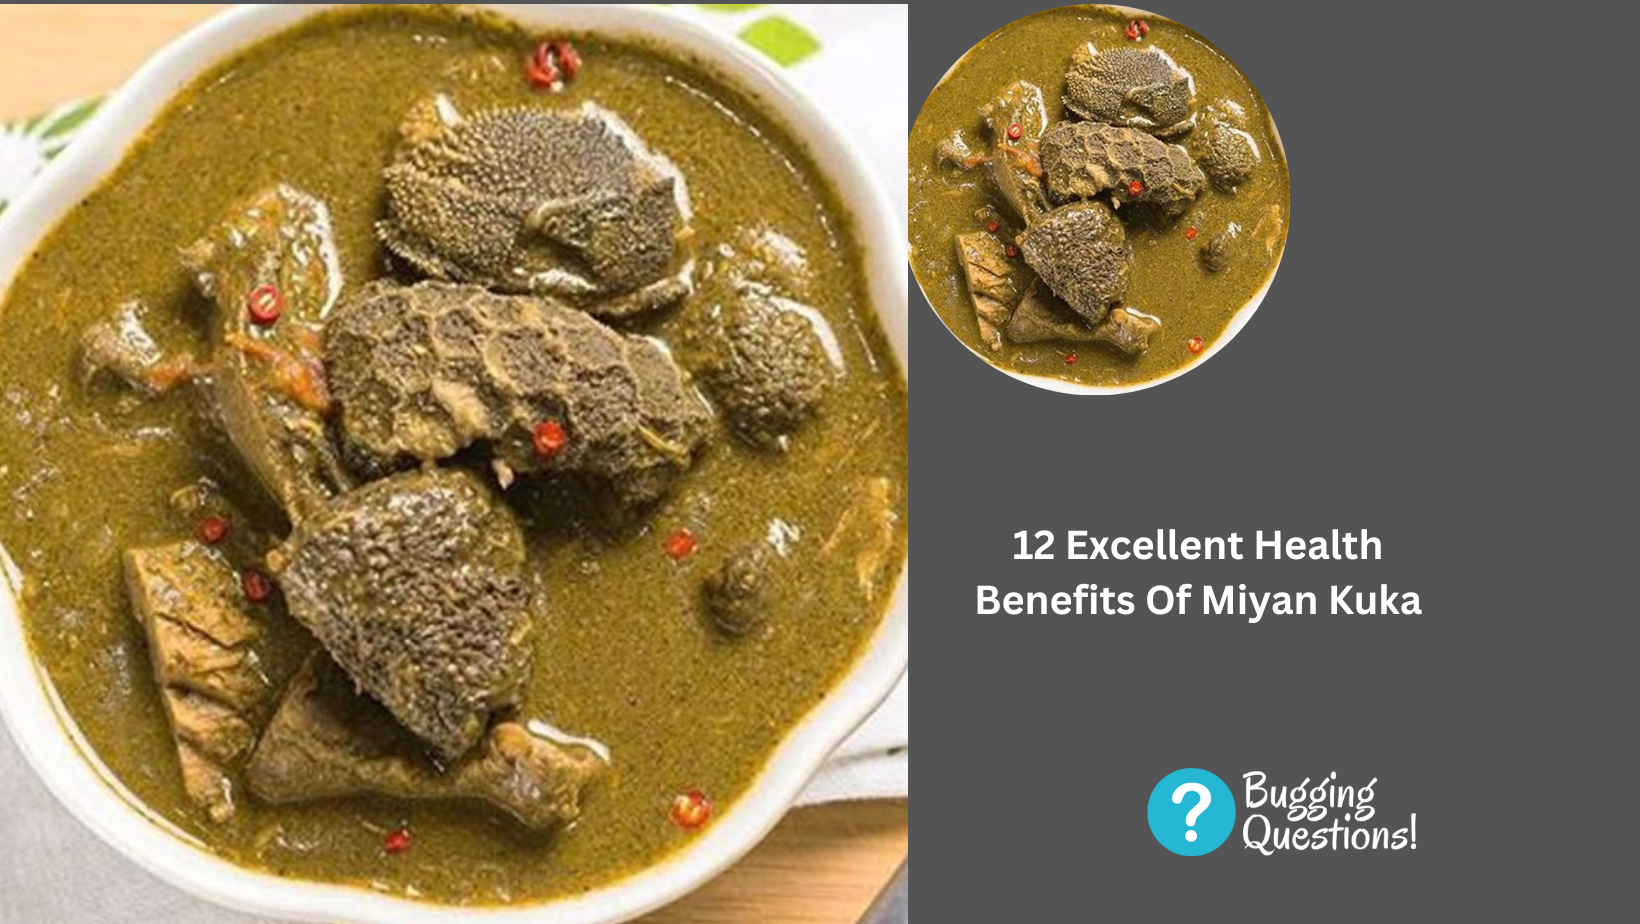 12 Excellent Health Benefits Of Miyan Kuka